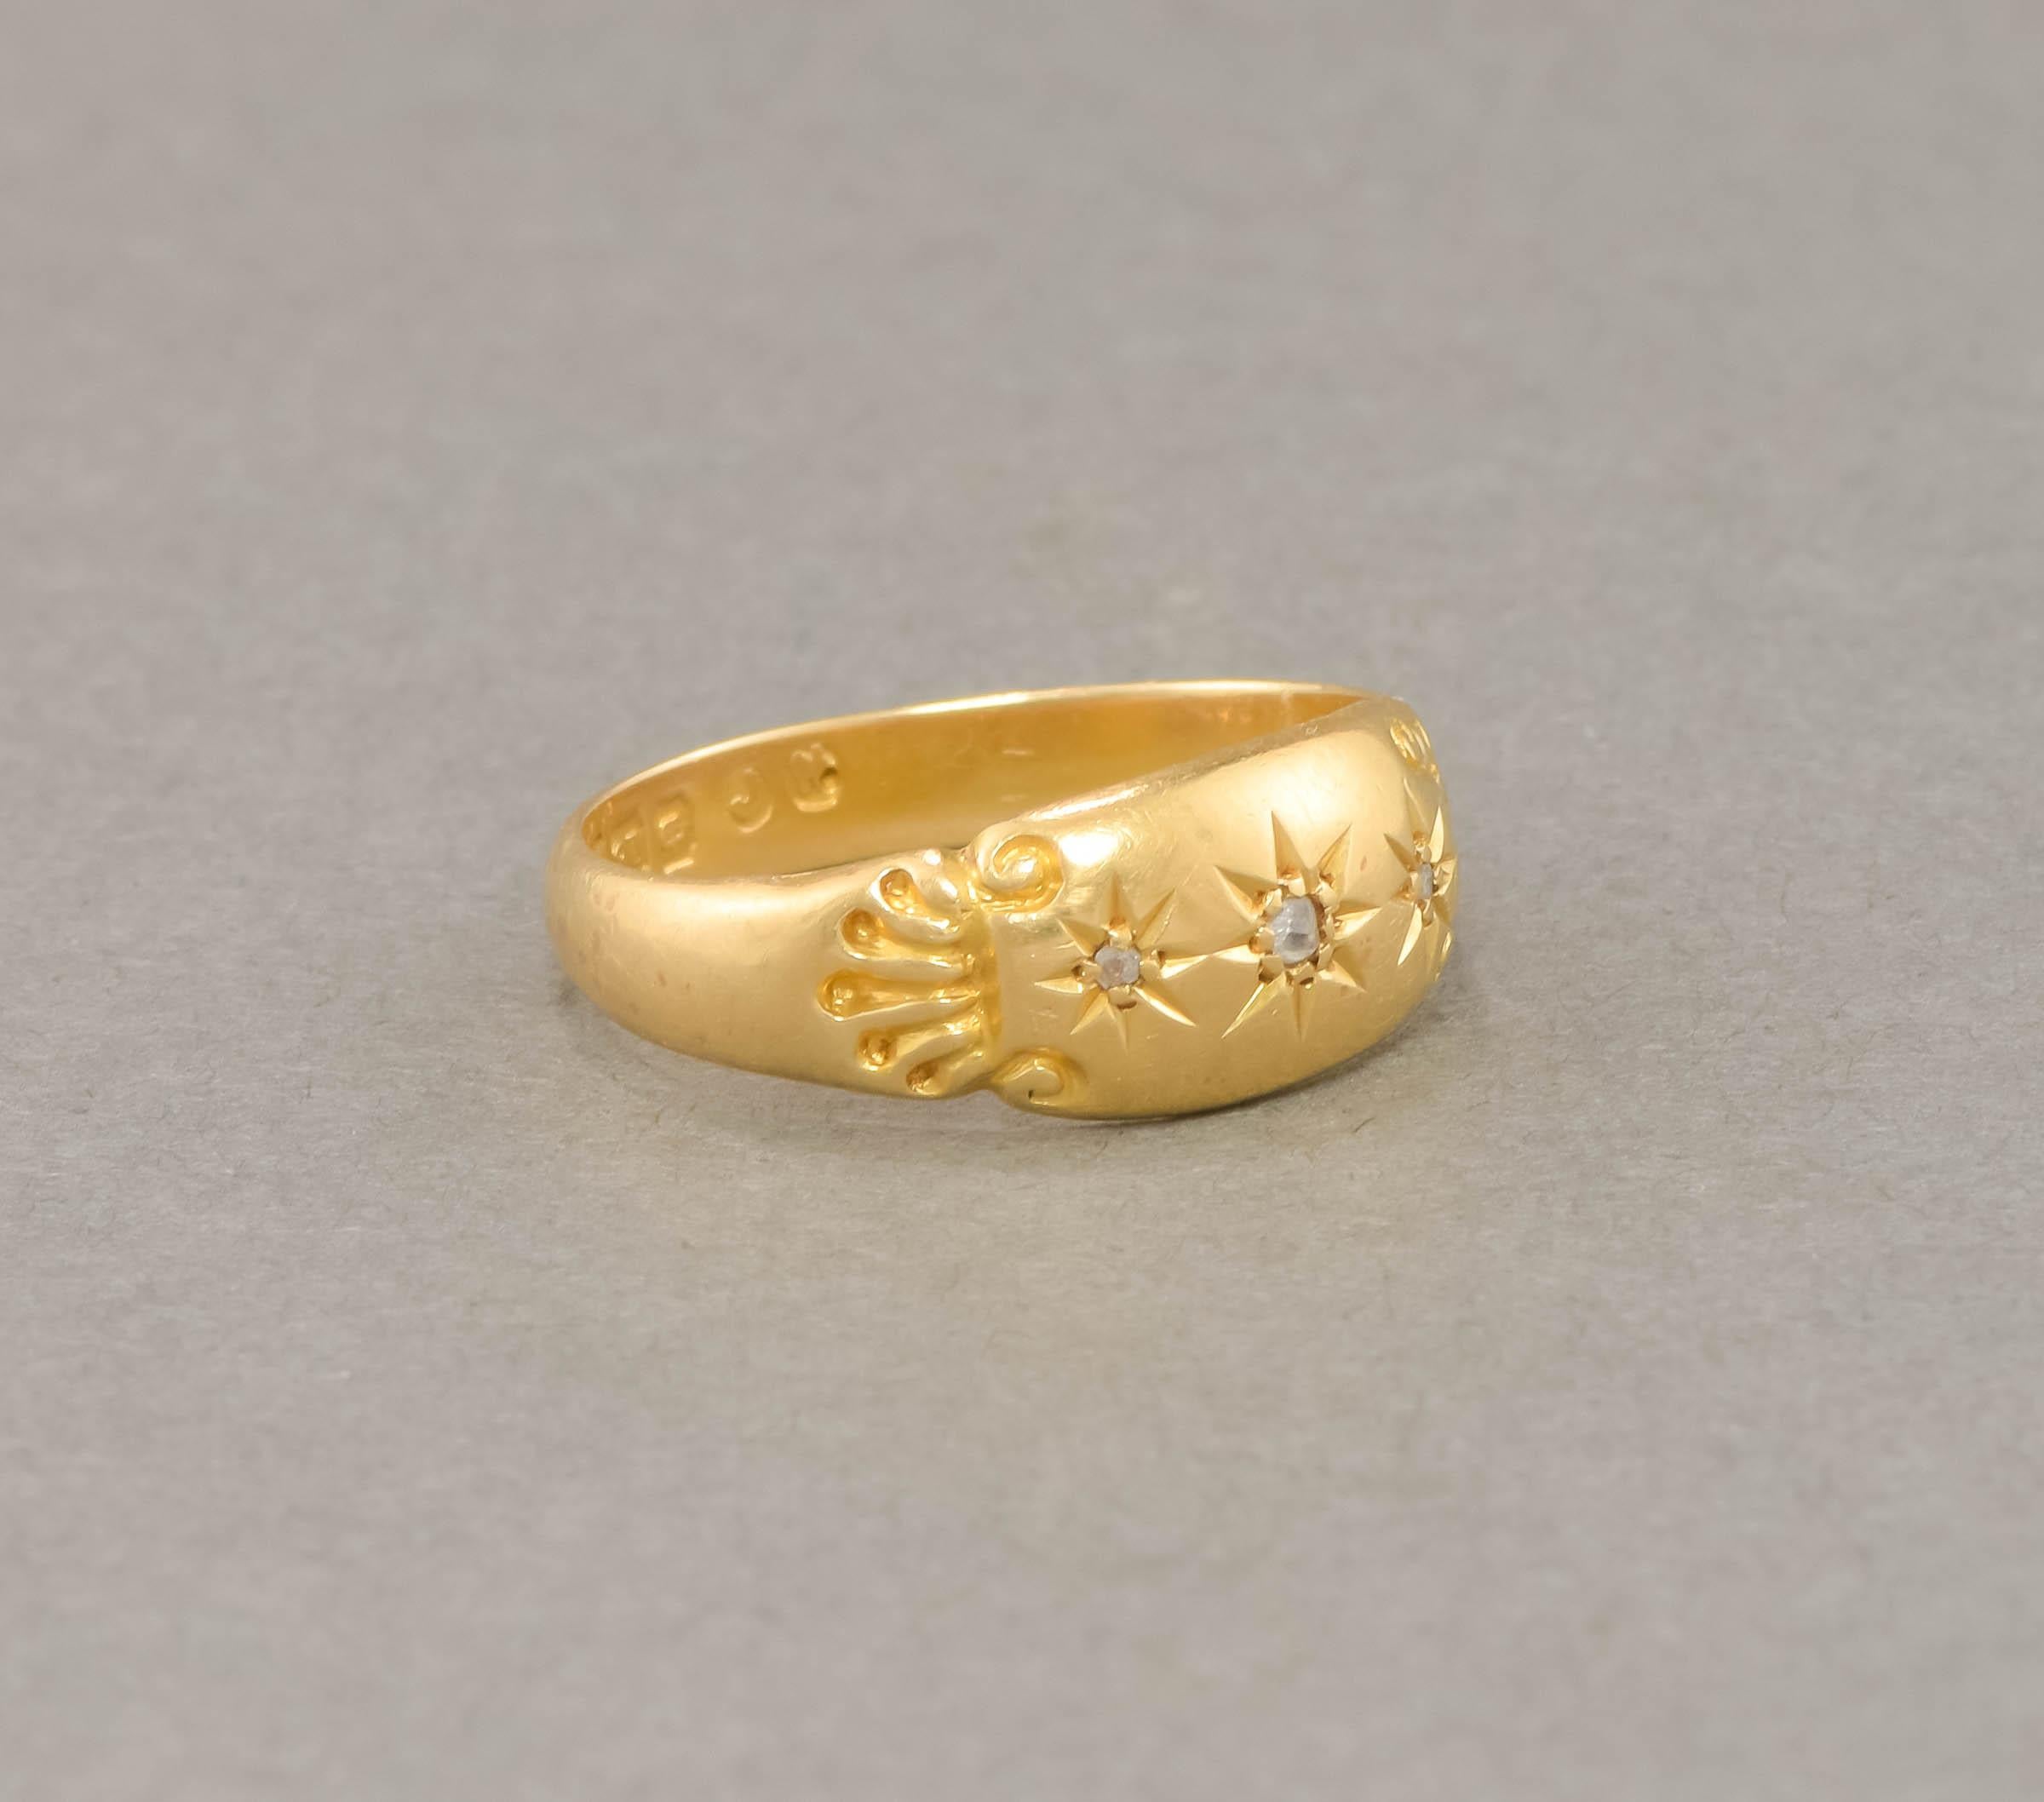 Edwardian 18K Gold Diamond Band Ring, Hallmarked Chester 1910 - 1911 6